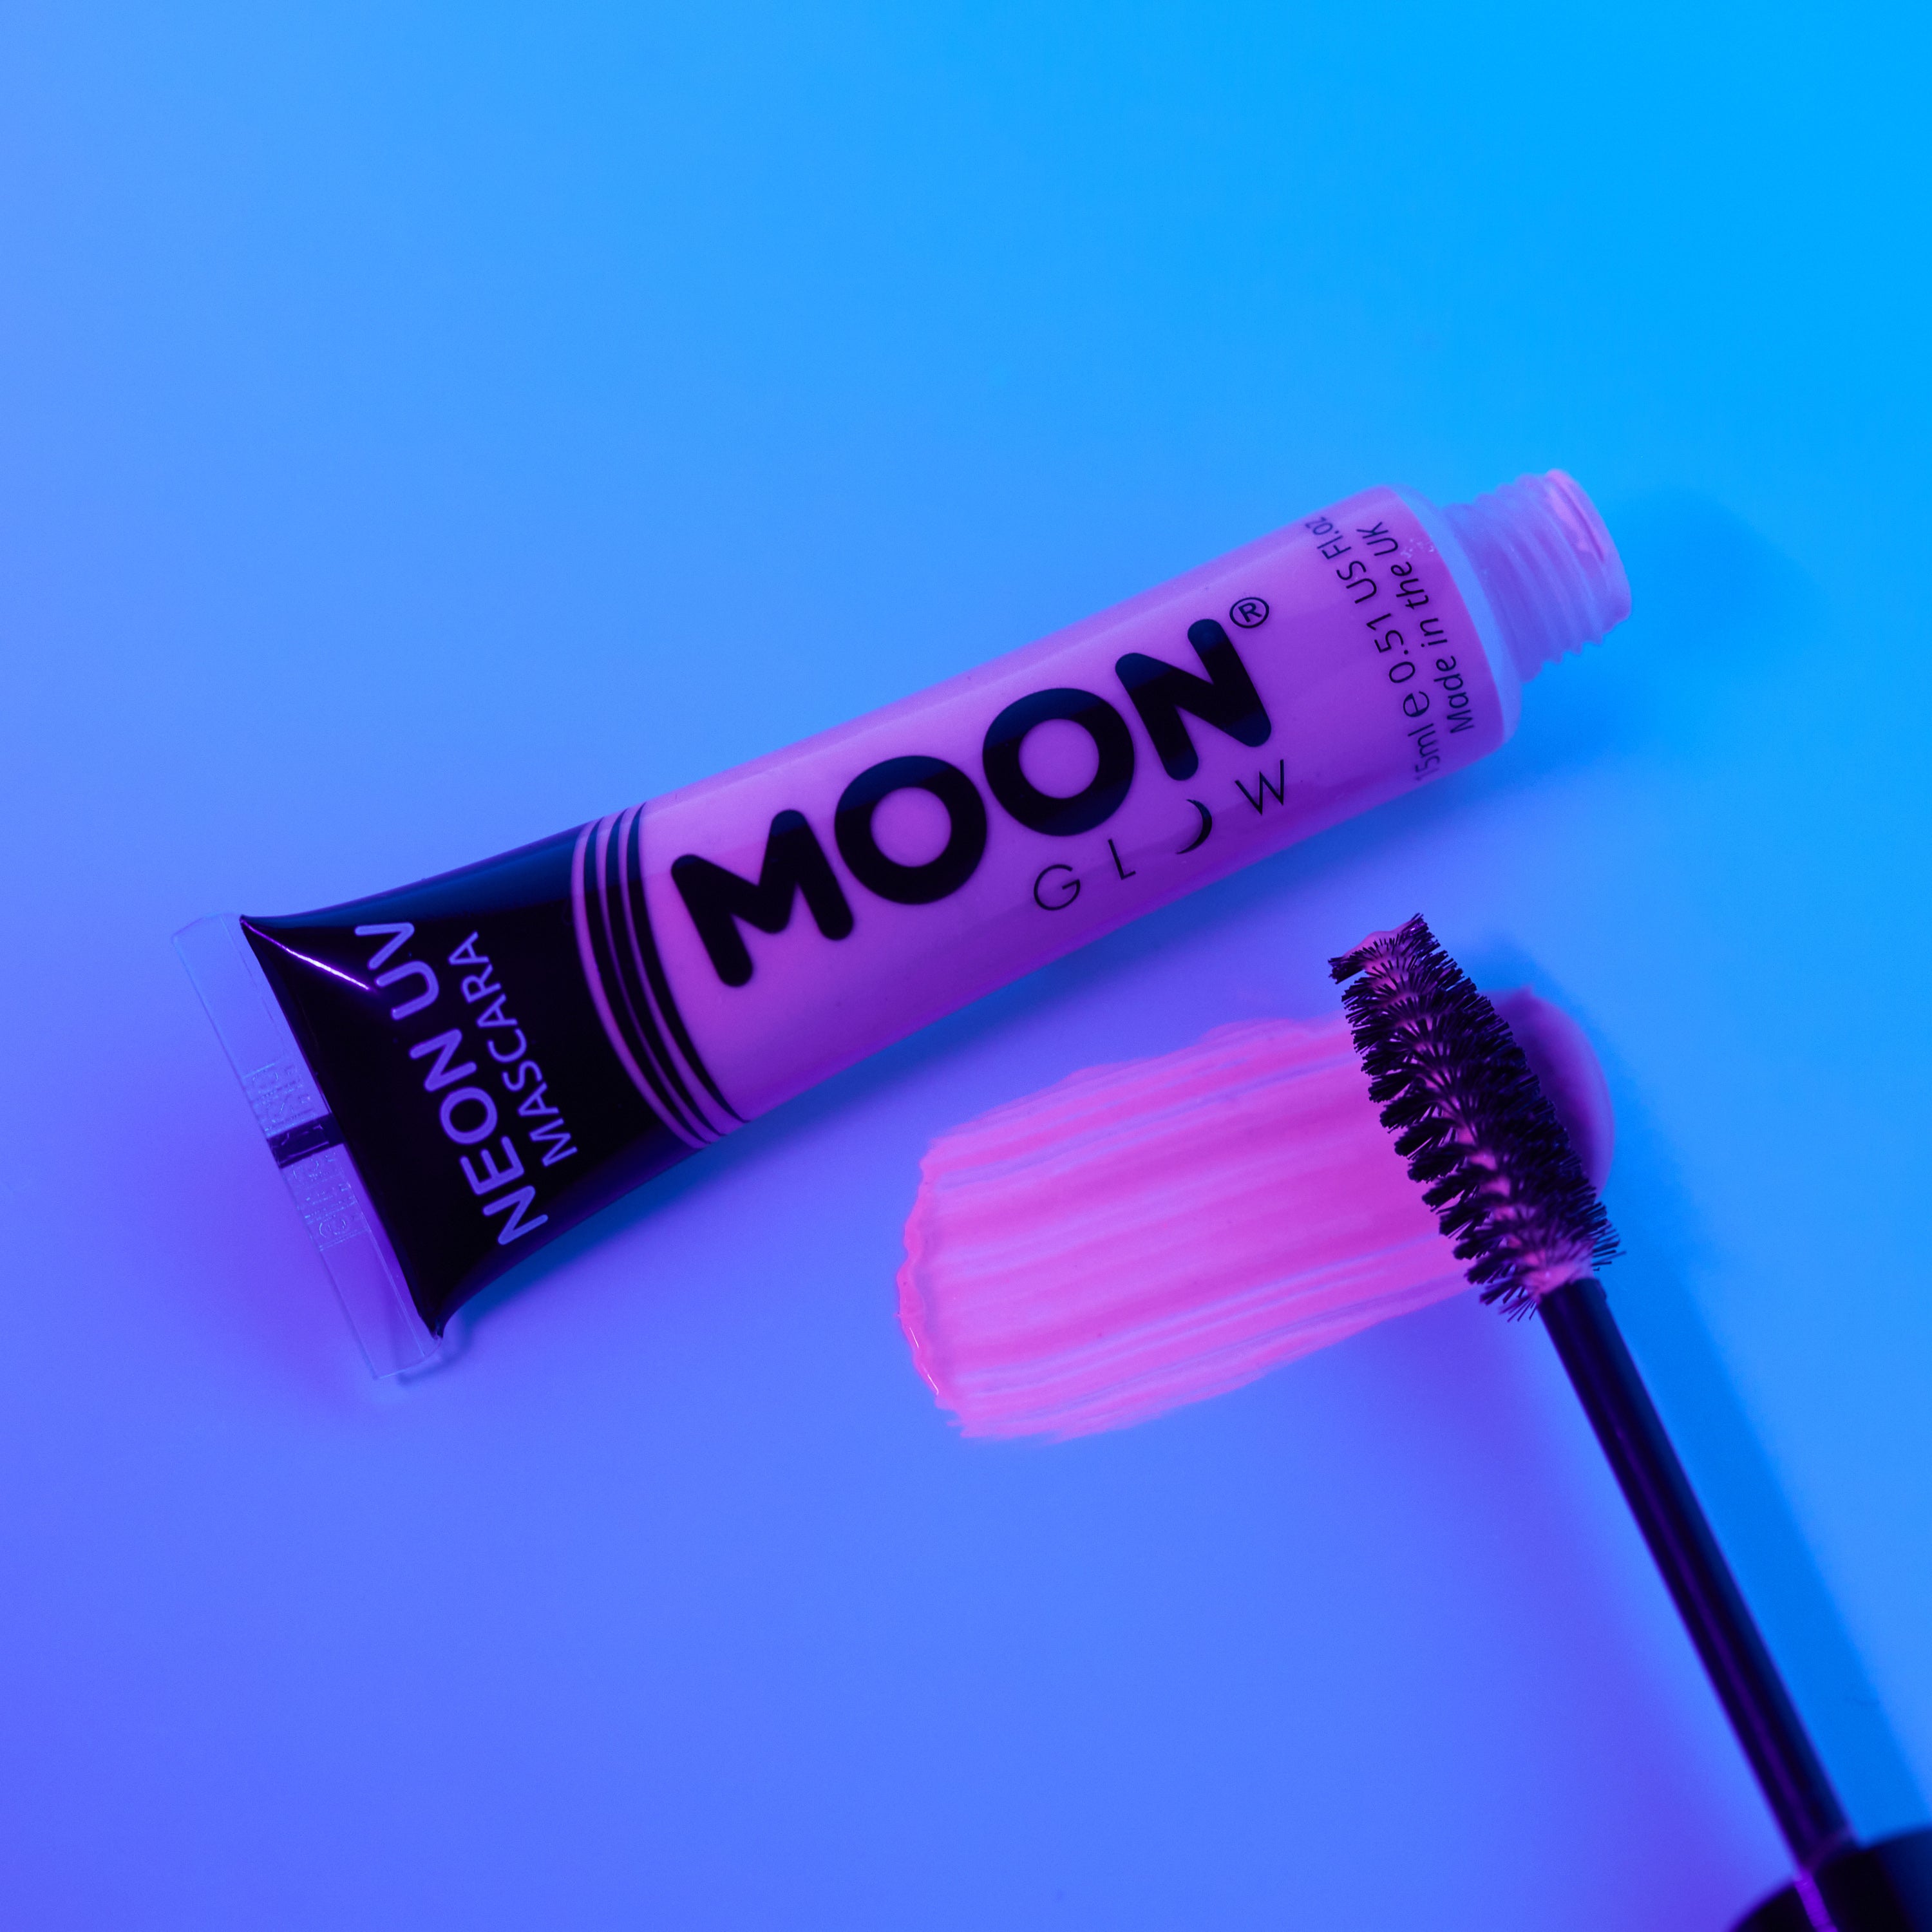 Intense Purple - Neon UV Glow Blacklight Mascara, 15mL. Cosmetically certified, FDA & Health Canada compliant, cruelty free and vegan.